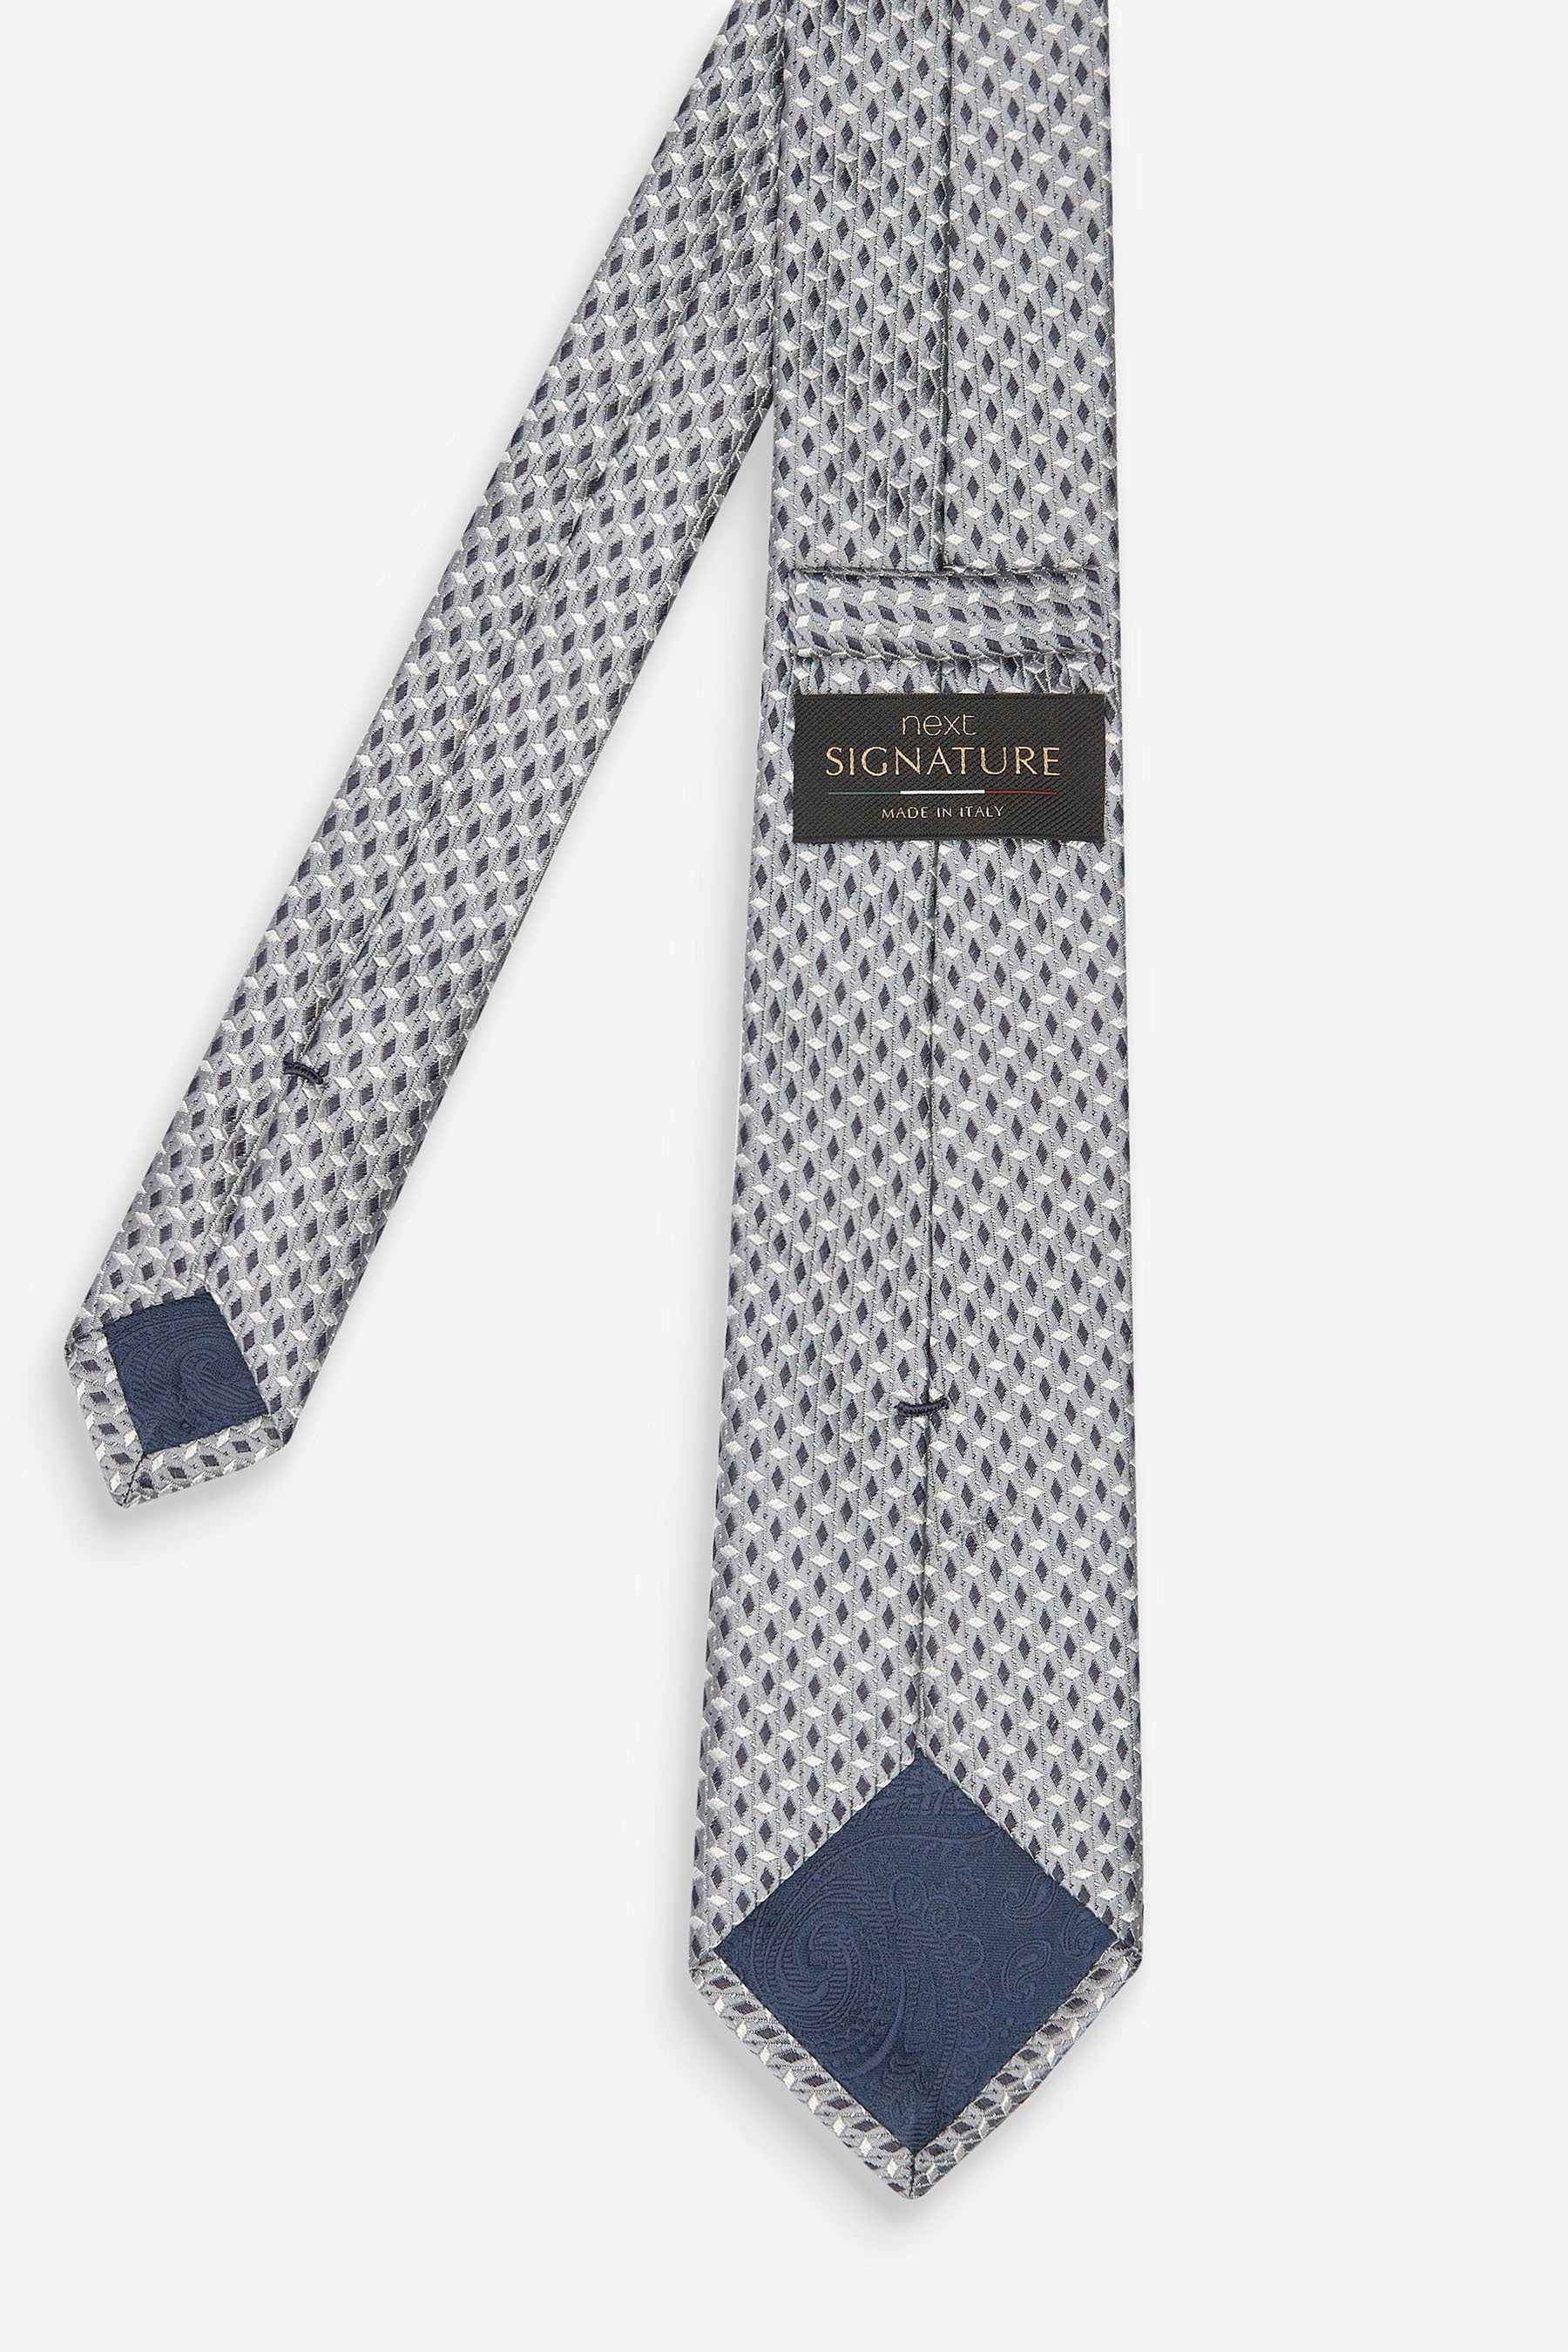 Herren Krawatten Next Krawatte Signature Krawatte Made in Italy mit Rautenmuster